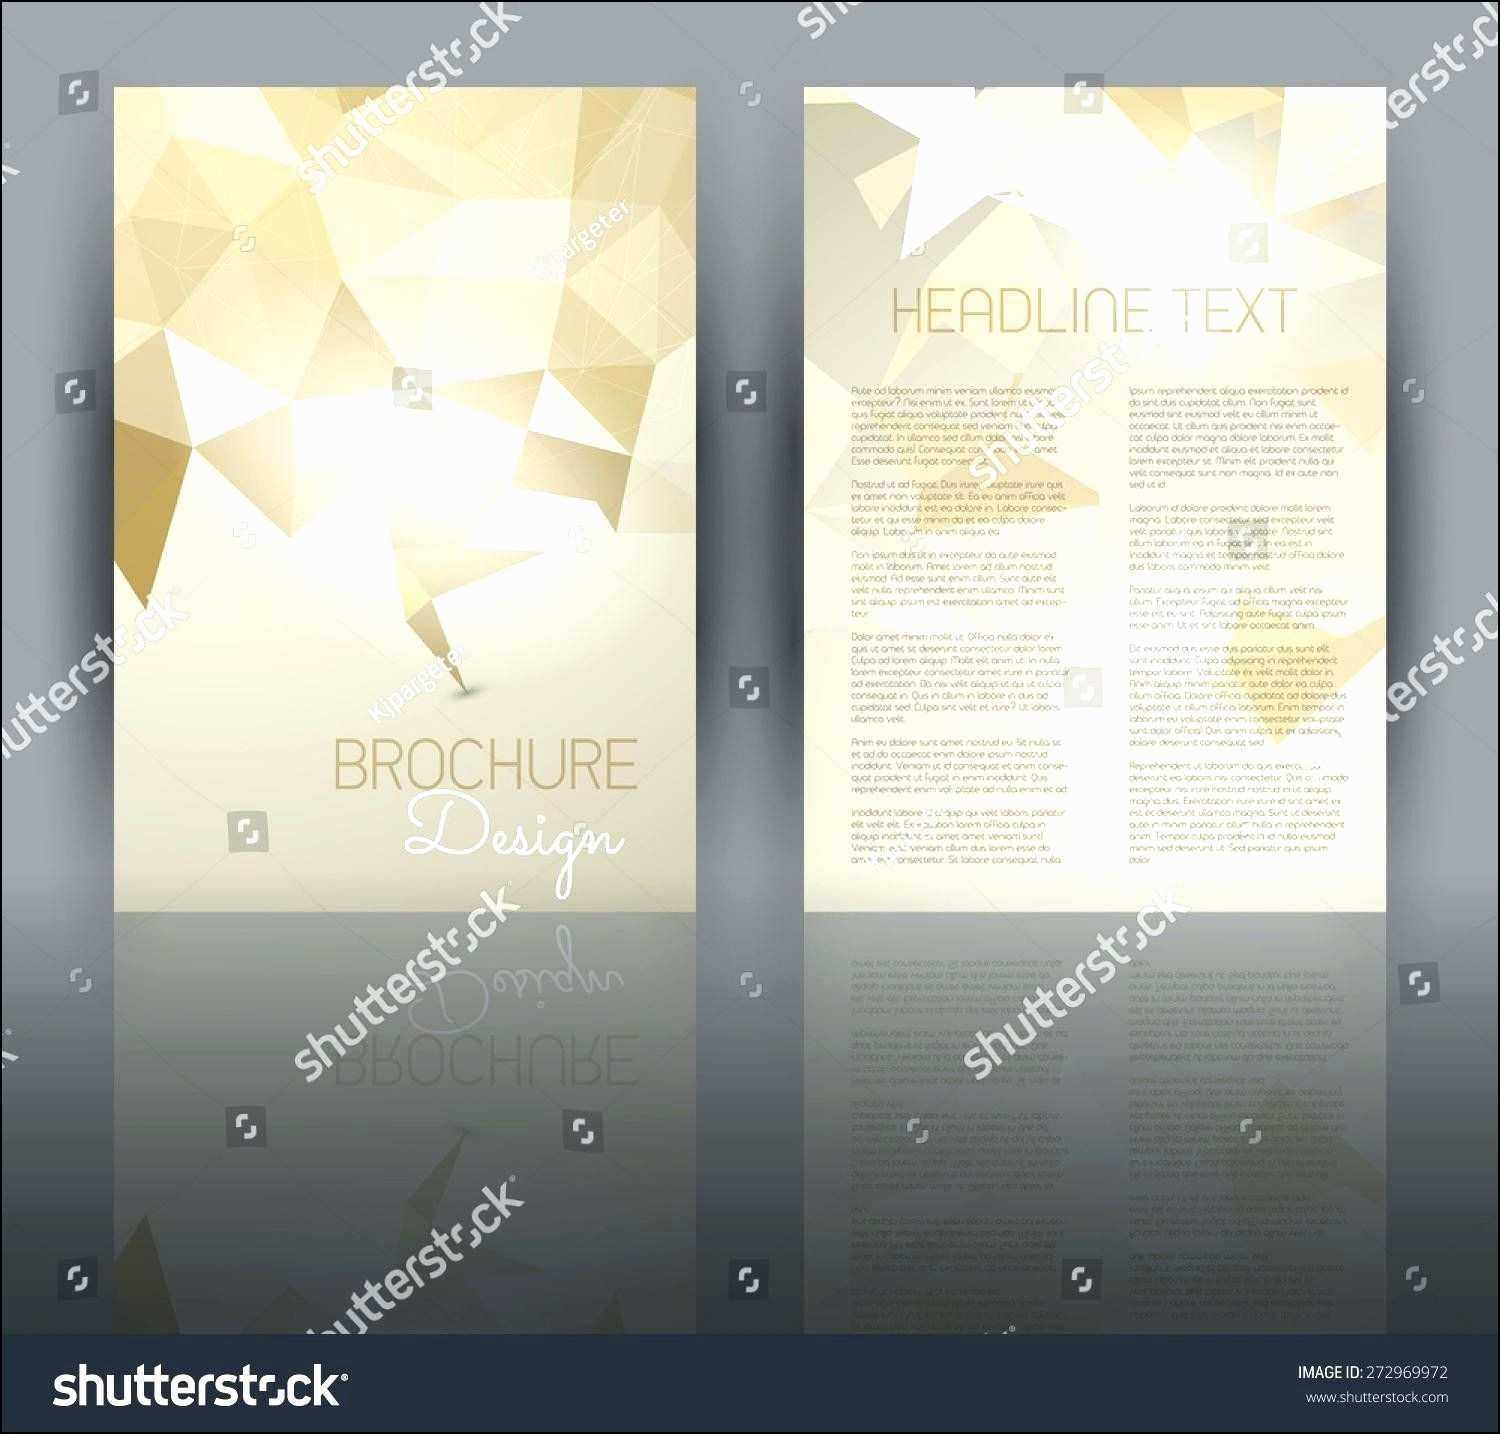 Fresh 25 Double Sided Tri Fold Brochure Template | Brochure For Double Sided Tri Fold Brochure Template